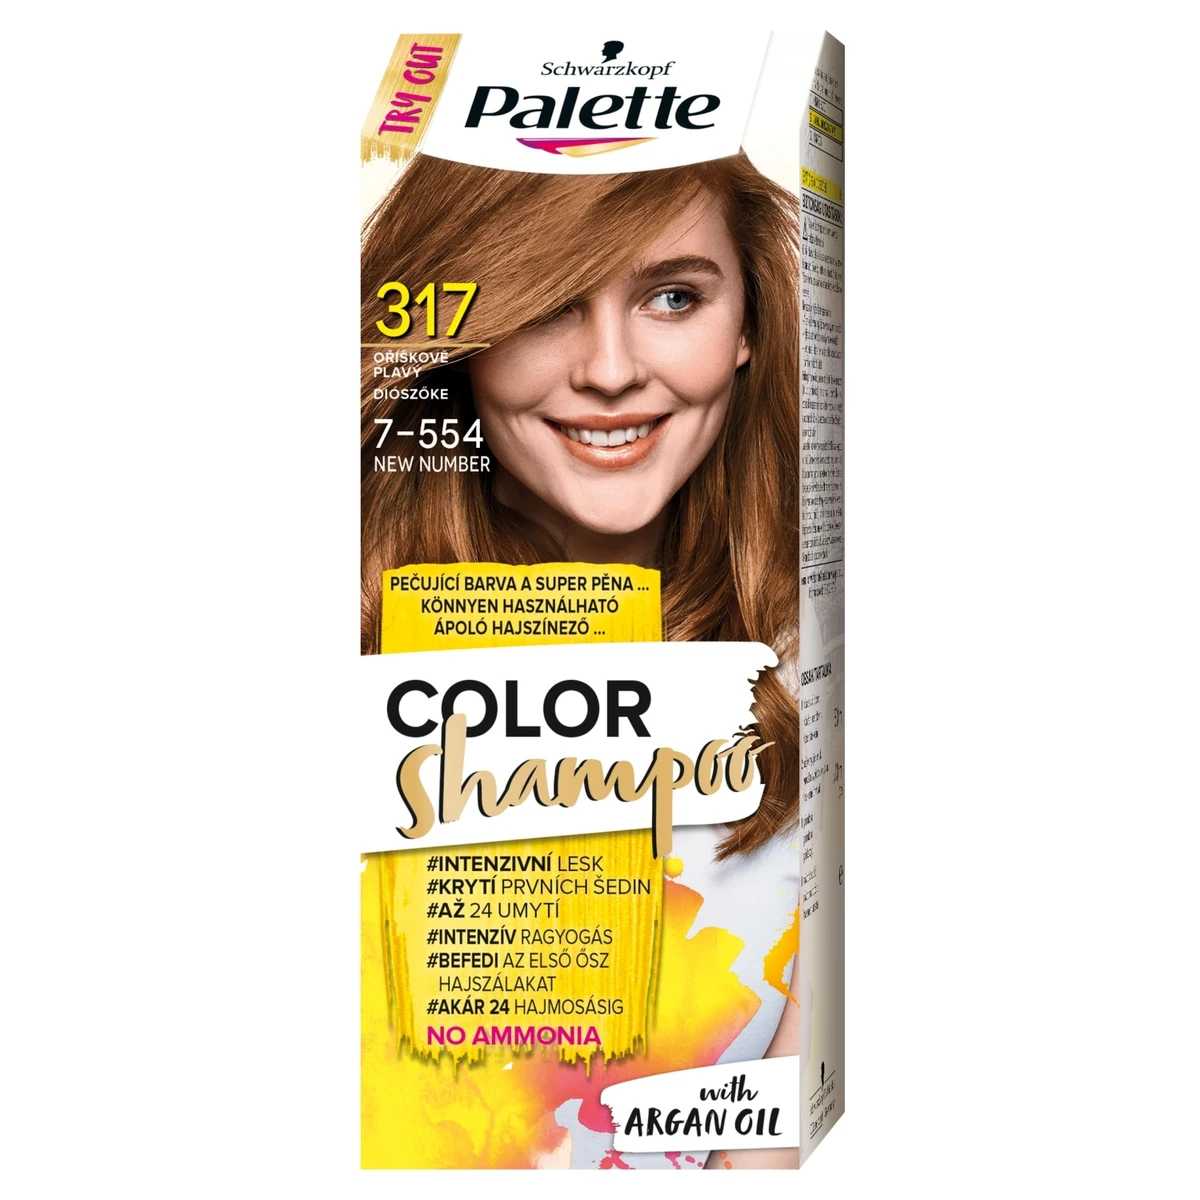 Schwarzkopf Palette Color Shampoo hajszínező 7 554 diószőke (317)